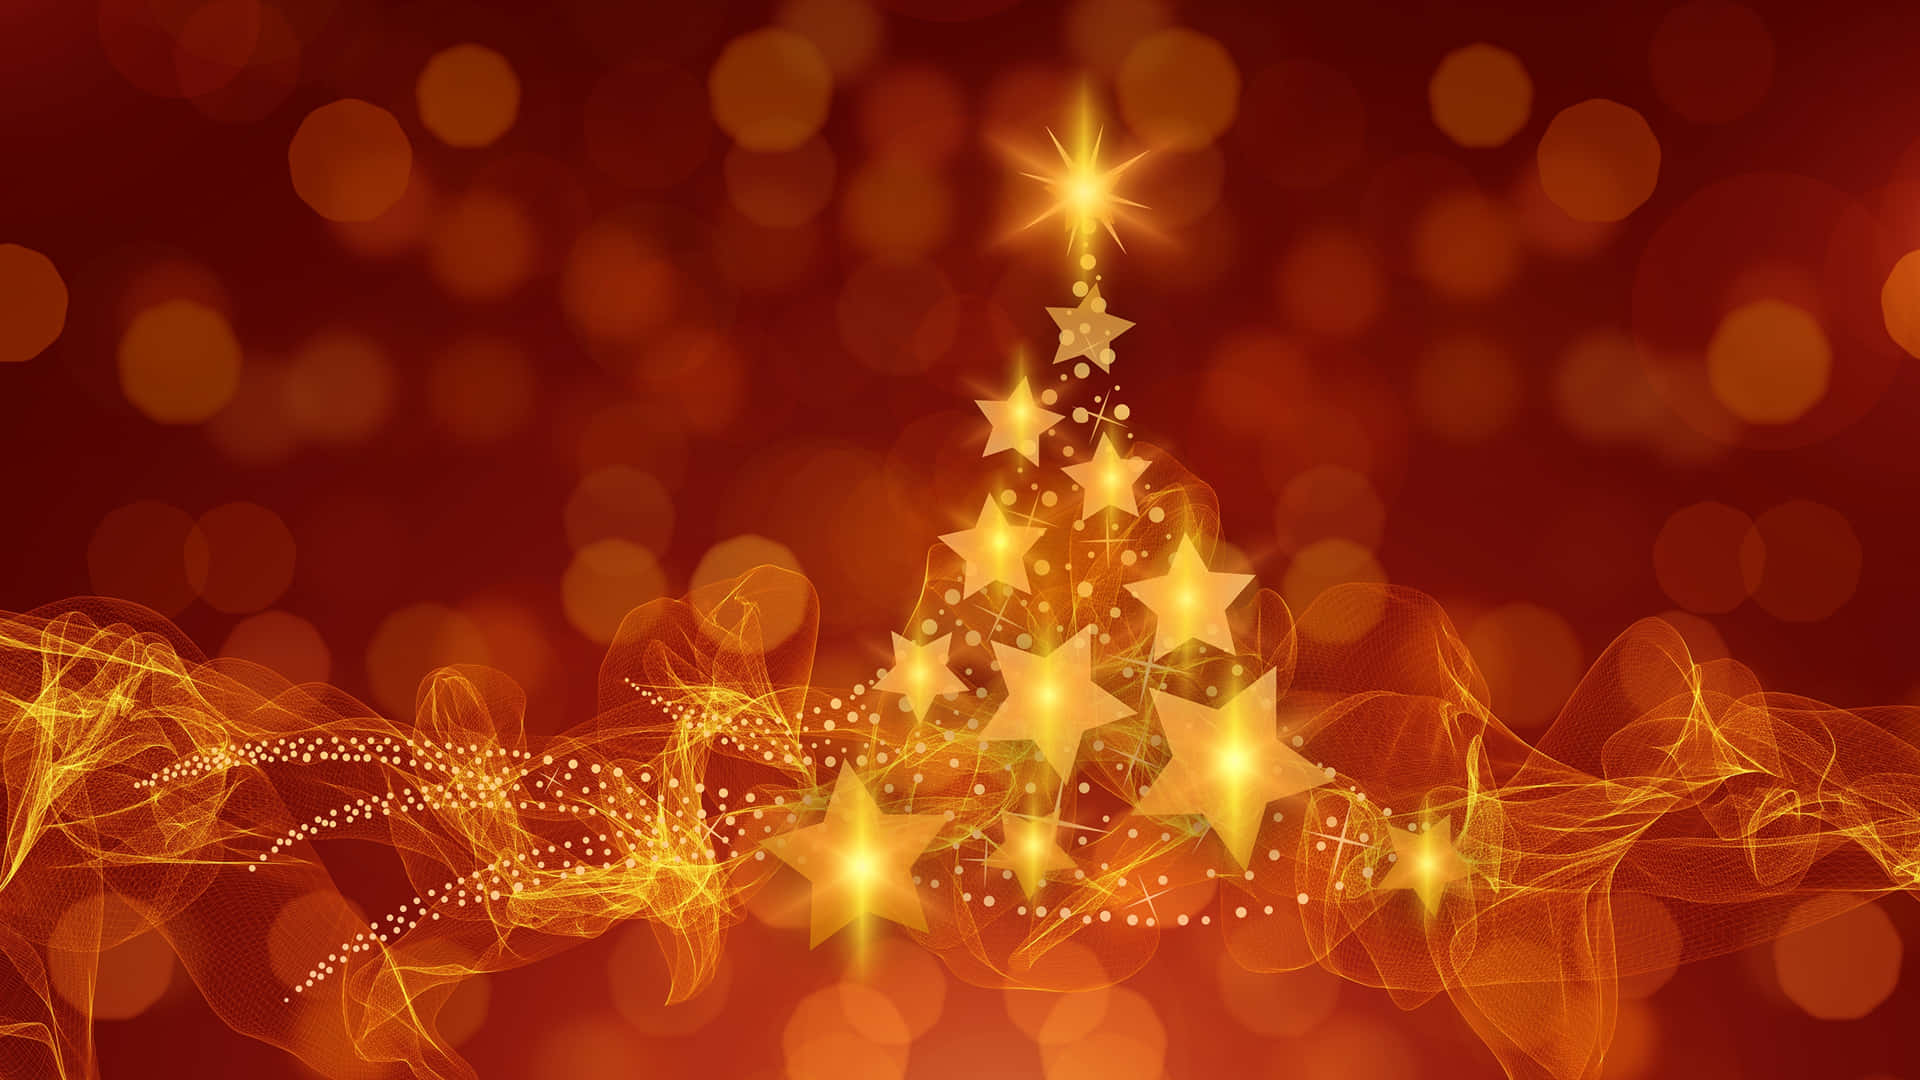 Download Make a wish on the beautiful Christmas star this season ...